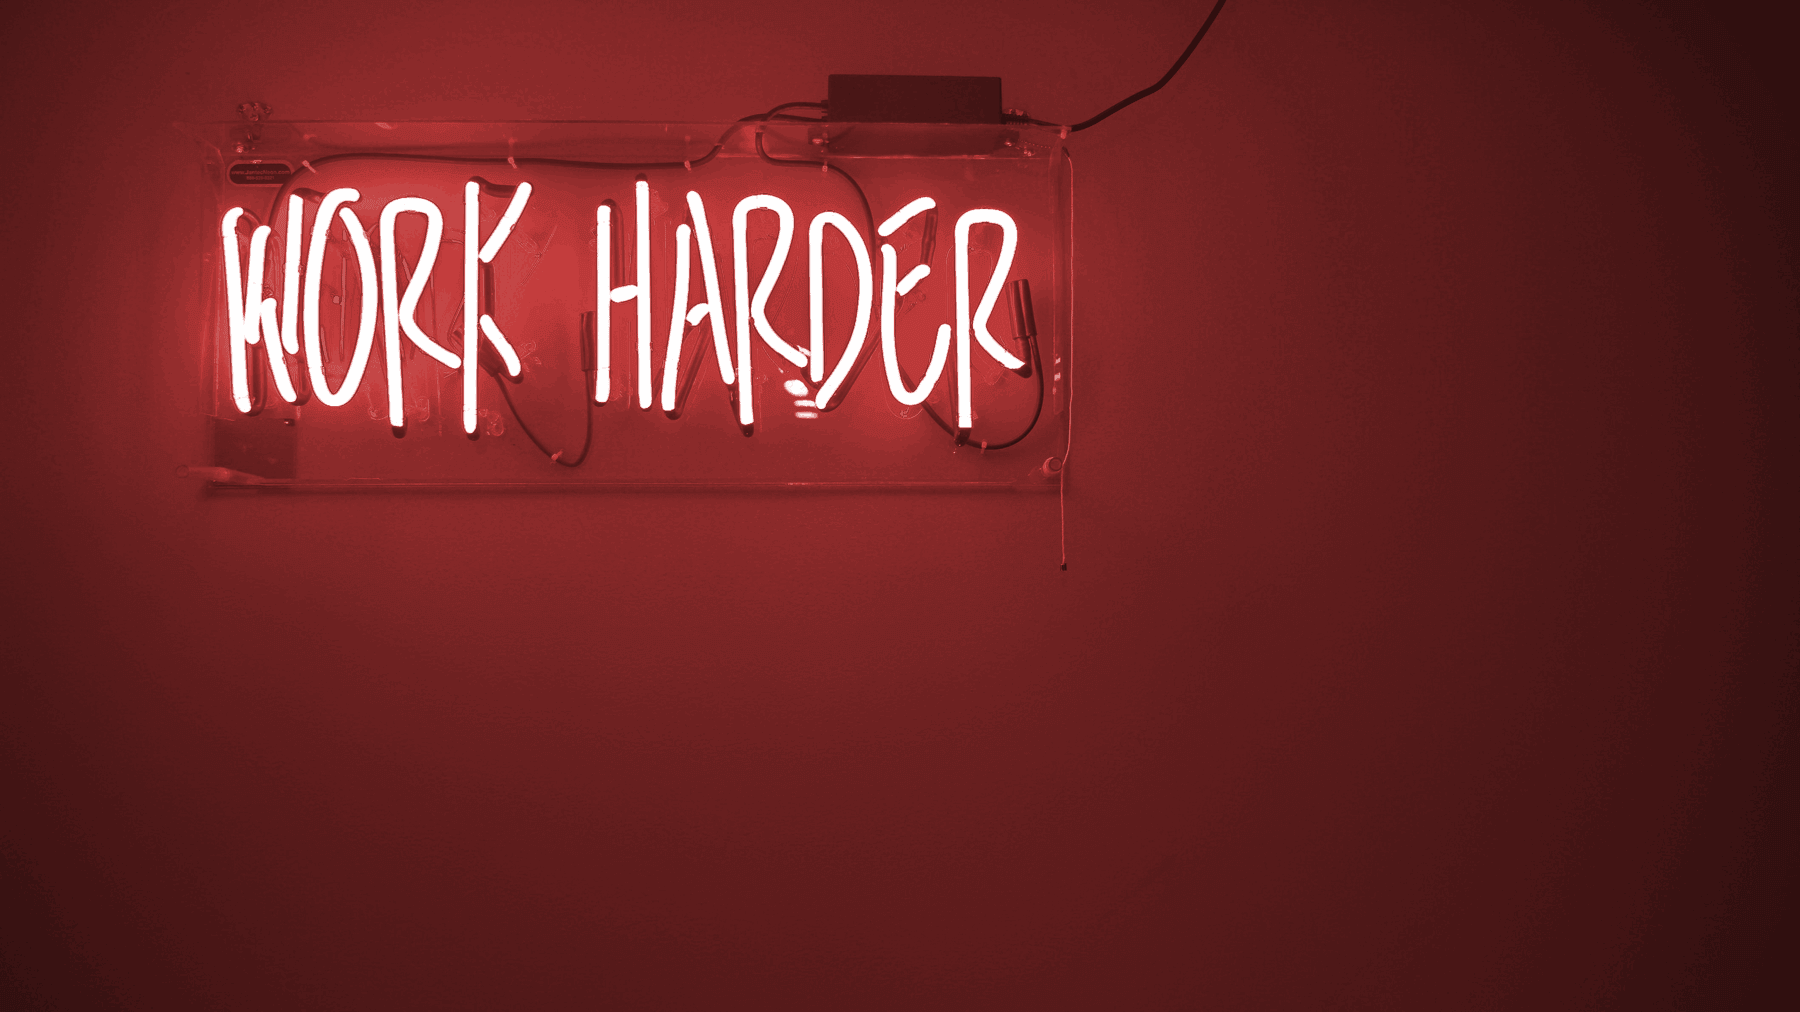 Work harder écrit en néon